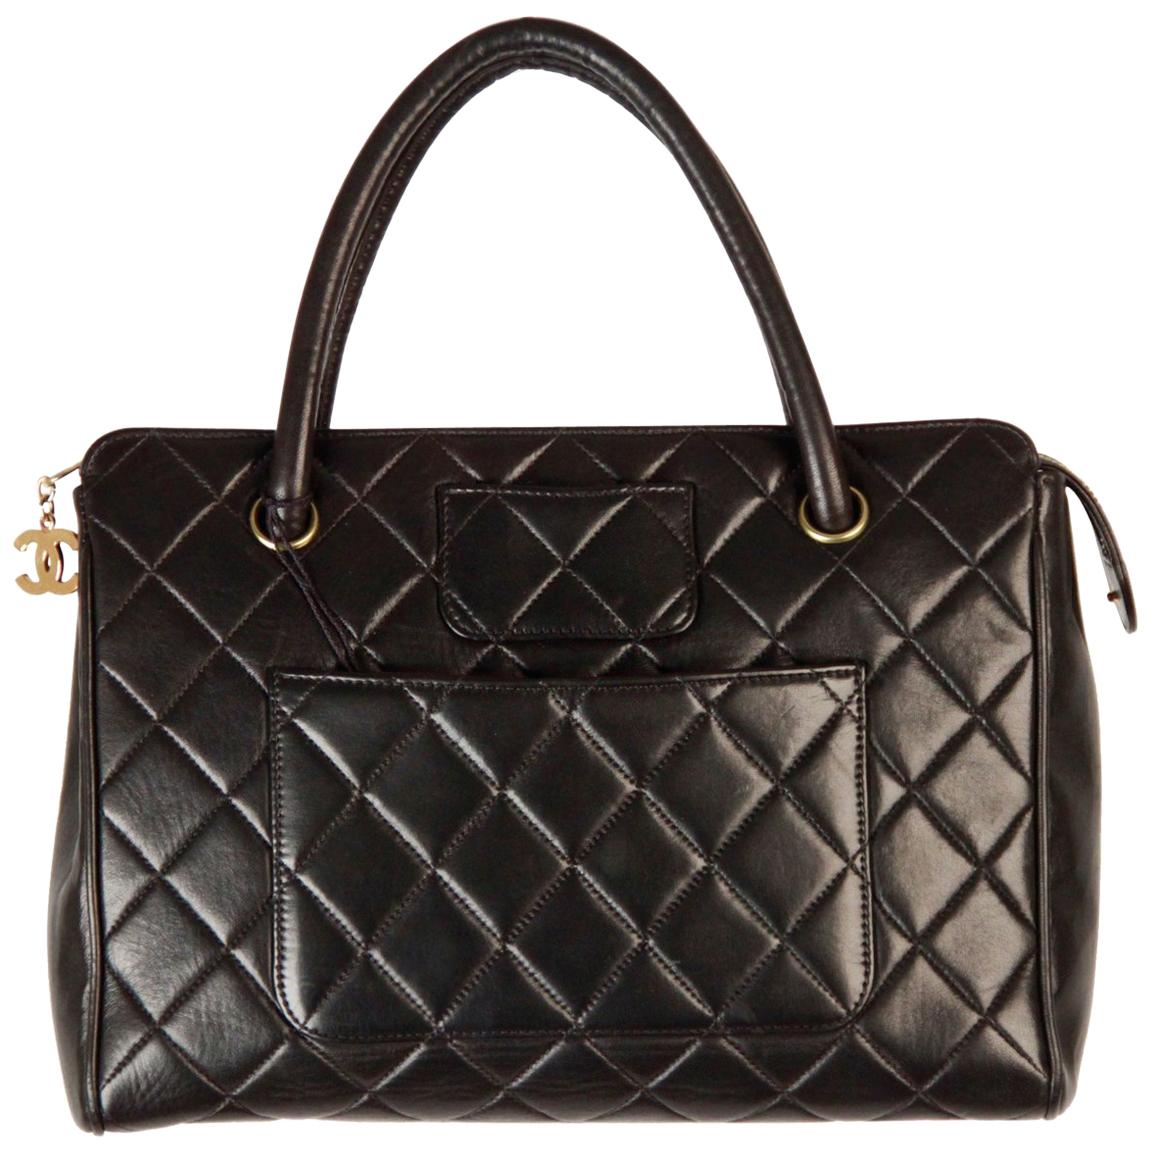 Chanel Vintage Black Quilted Handbag Satchel with Exterior Pockets